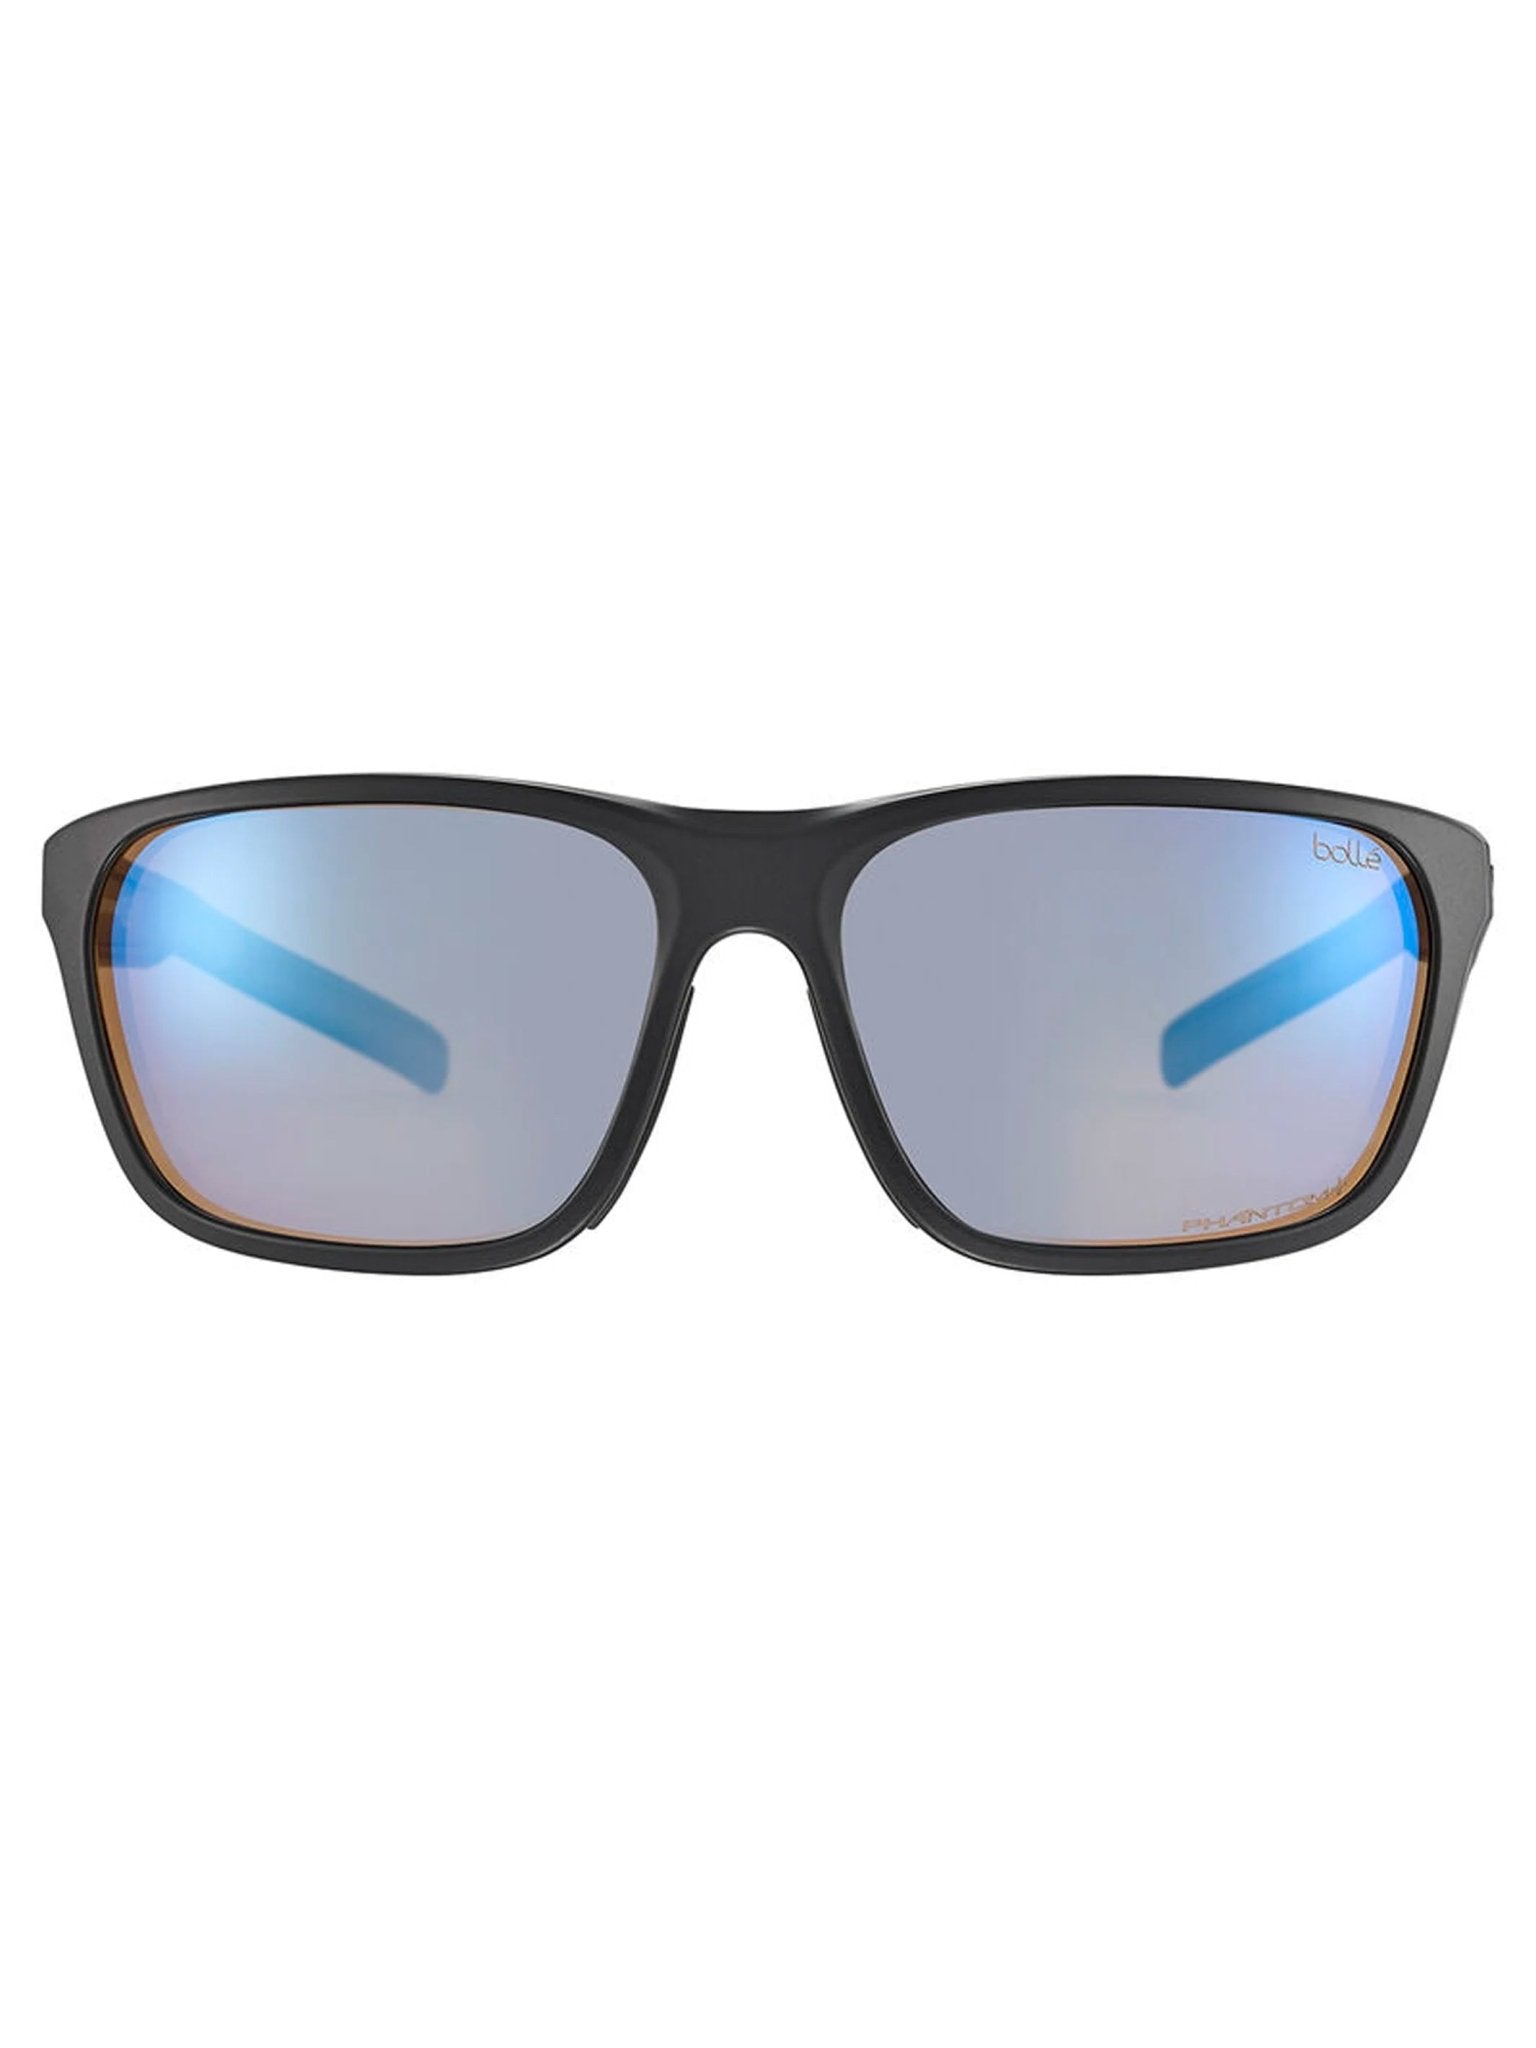 4elementsclothingBolléBolle - STRIX Sunglasses Black Matte - Volt+ 1 Offshore PolarizedsunglassesBS022002